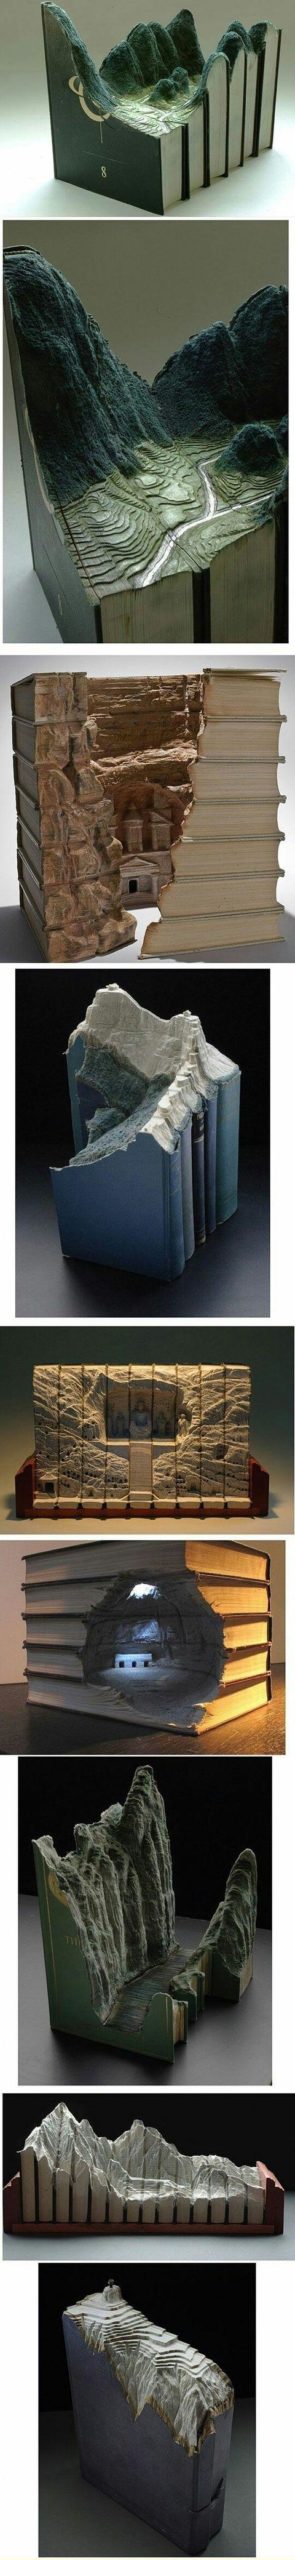 Book+sculptures